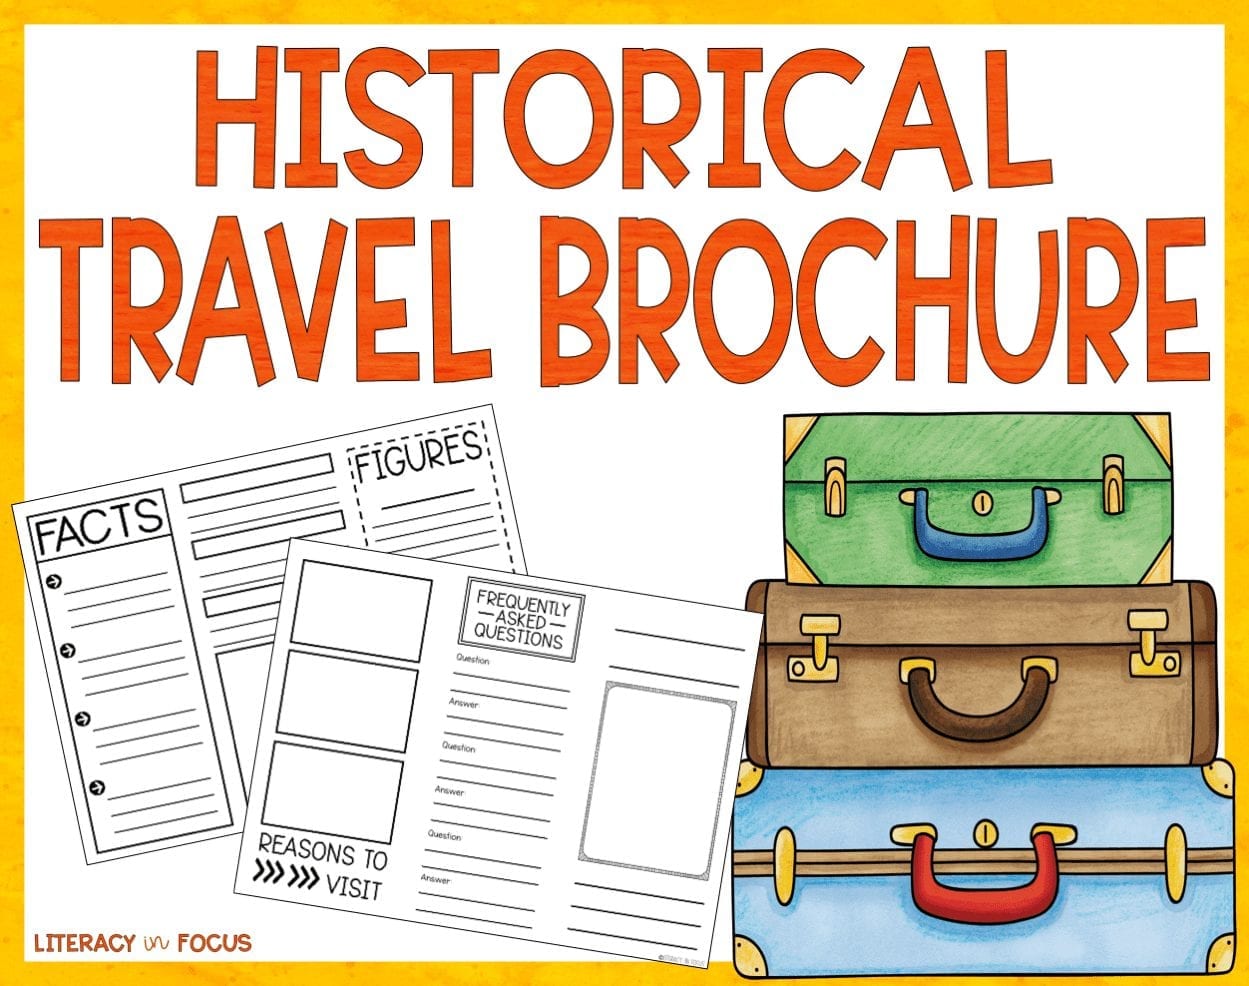 Historical Travel Brochure